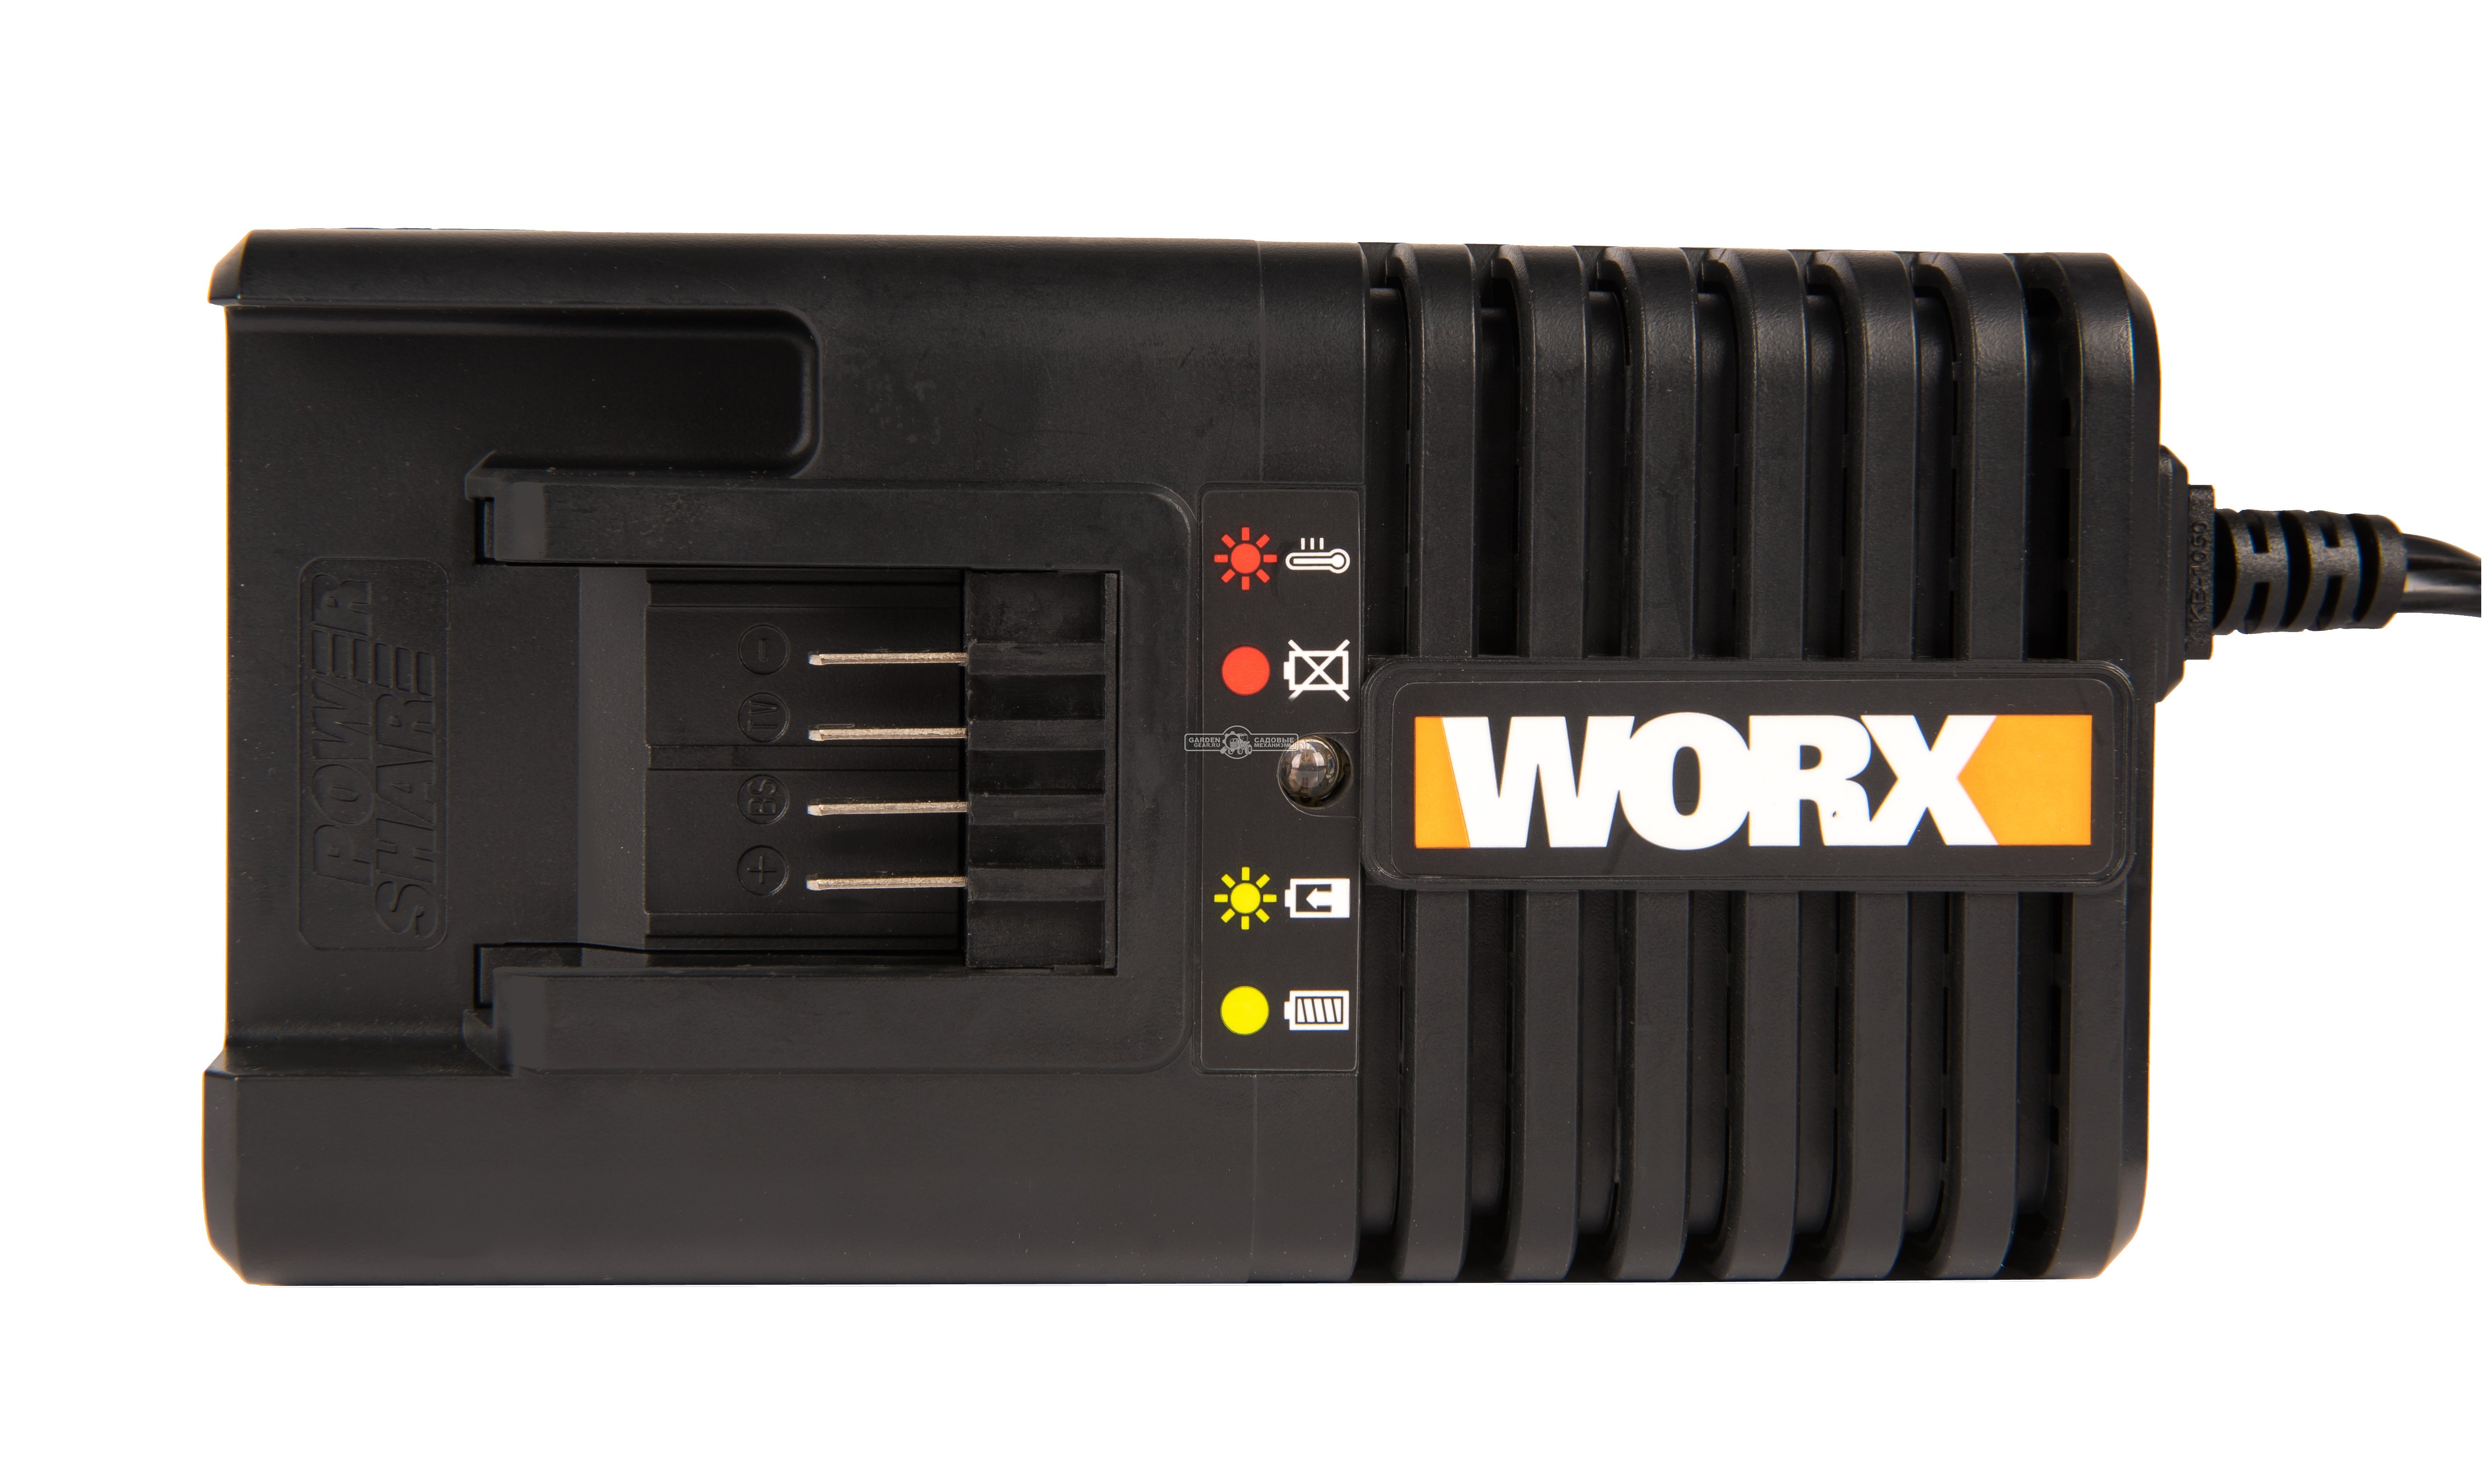 Зарядное устройство Worx WA3765 автомобильное (20В, 2А)